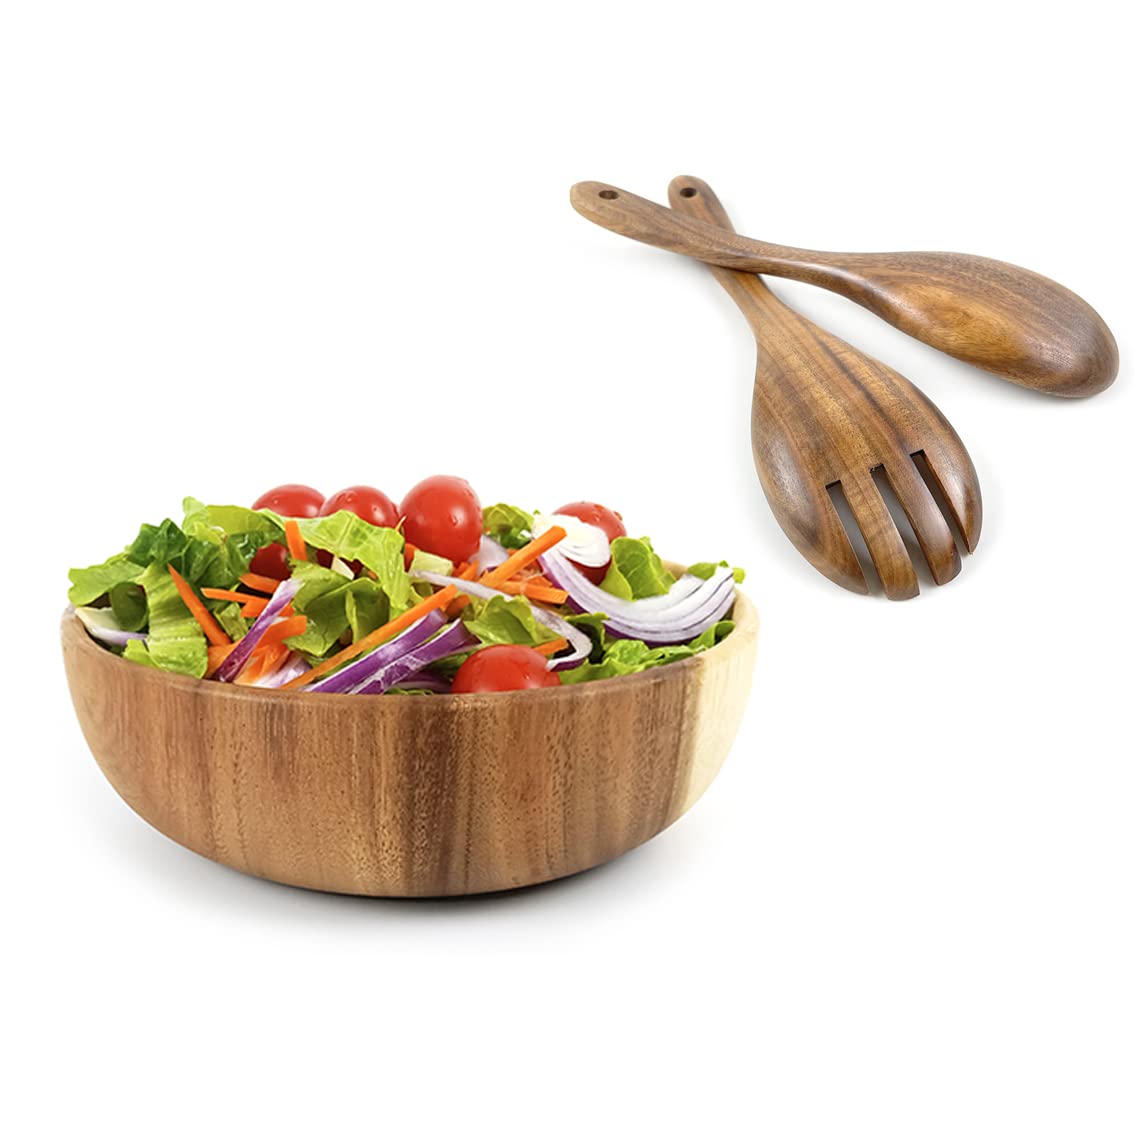 EWEIGEER 10.5-inch Wood Salad Server Acacia Wooden Serving Spoon Fork Set of 2